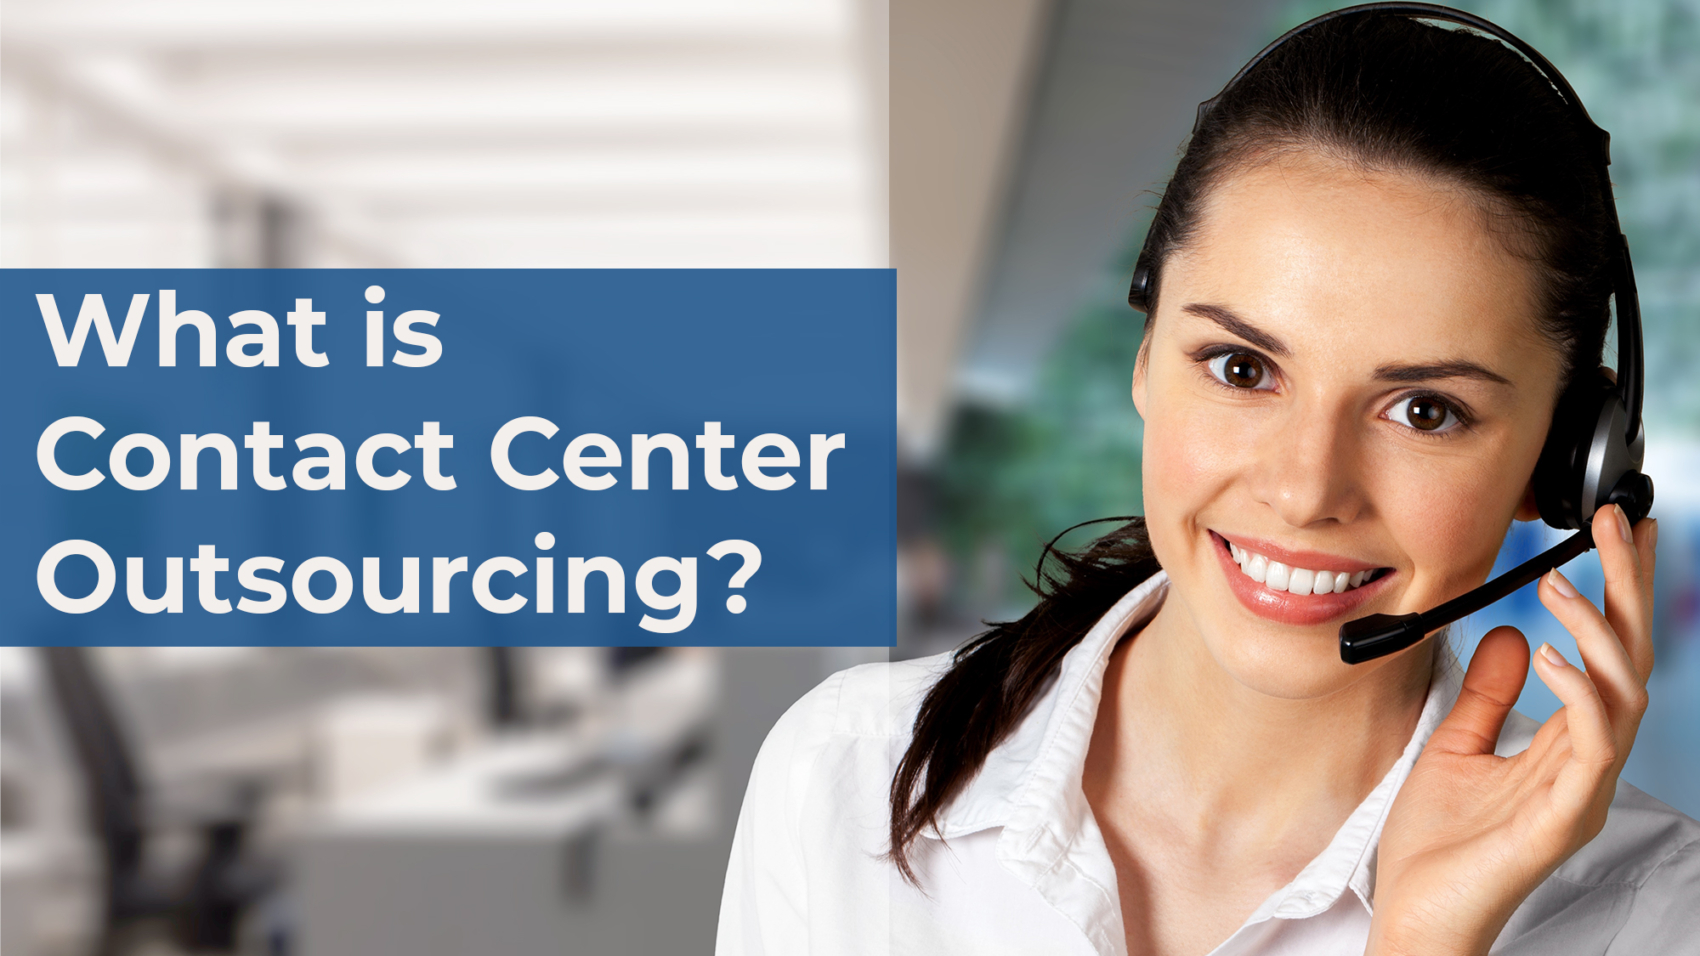 Contact center outsourcing